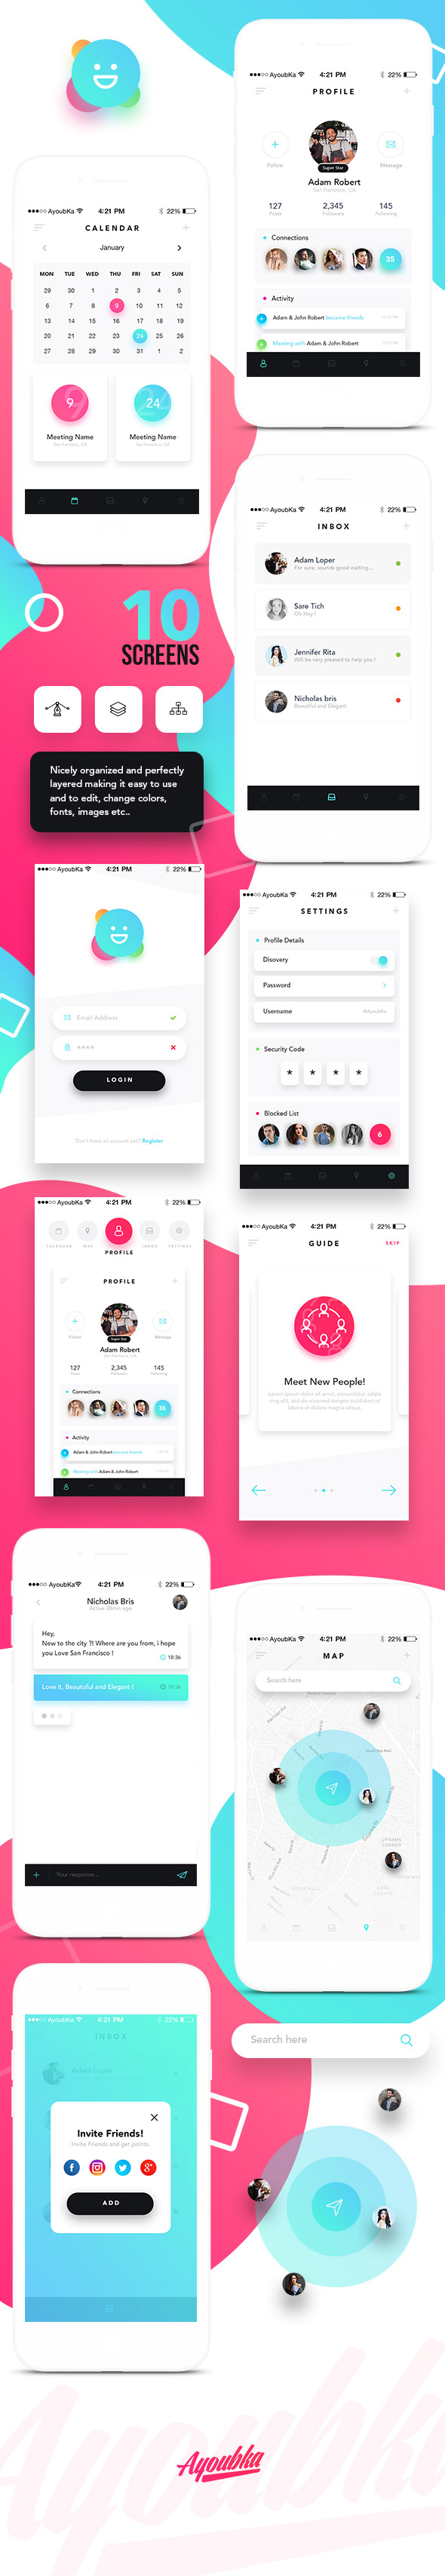 UI ux design mobile app Chat ui kit gradient minimal Chatly